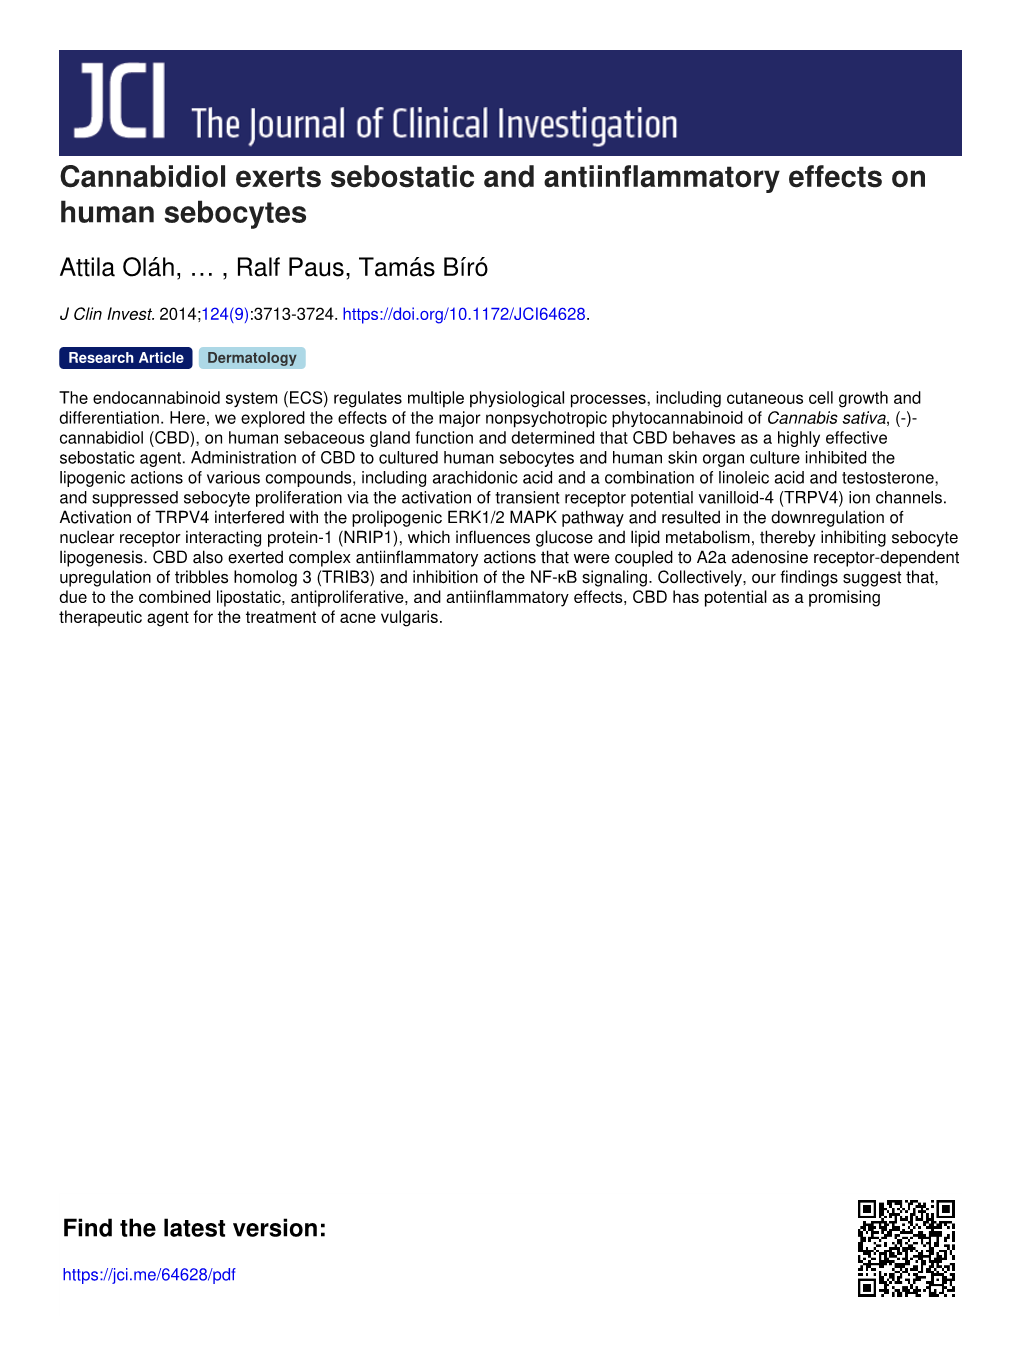 Cannabidiol Exerts Sebostatic and Antiinflammatory Effects on Human Sebocytes